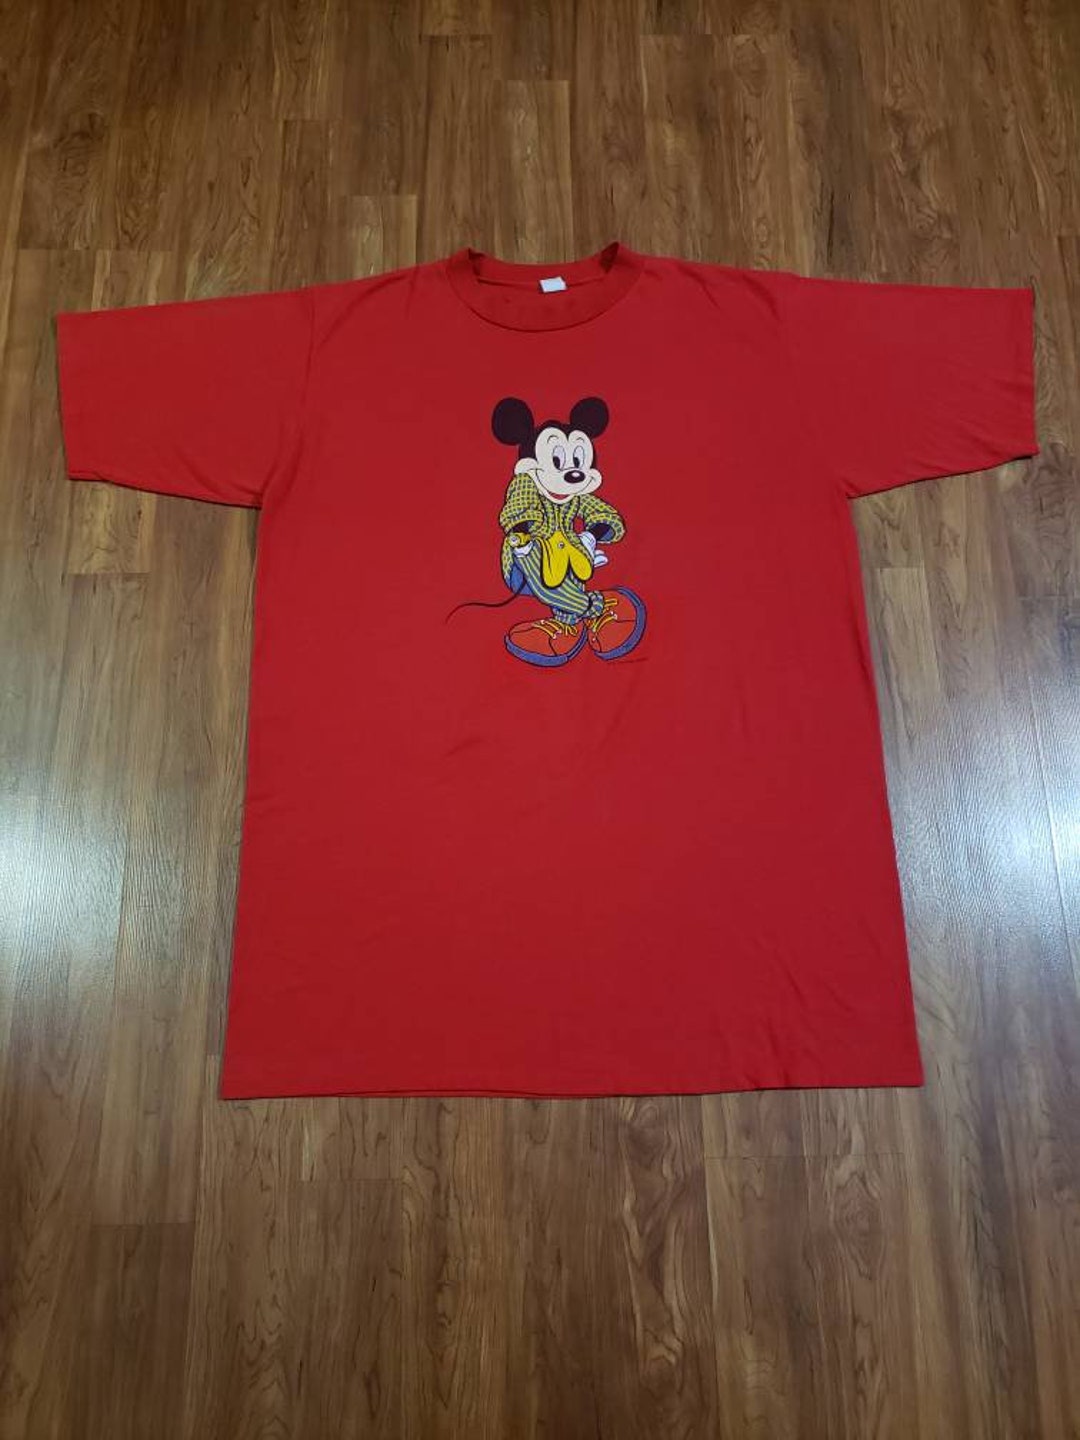 Mickey Mouse Chanel Logo Shirt - Vintagenclassic Tee